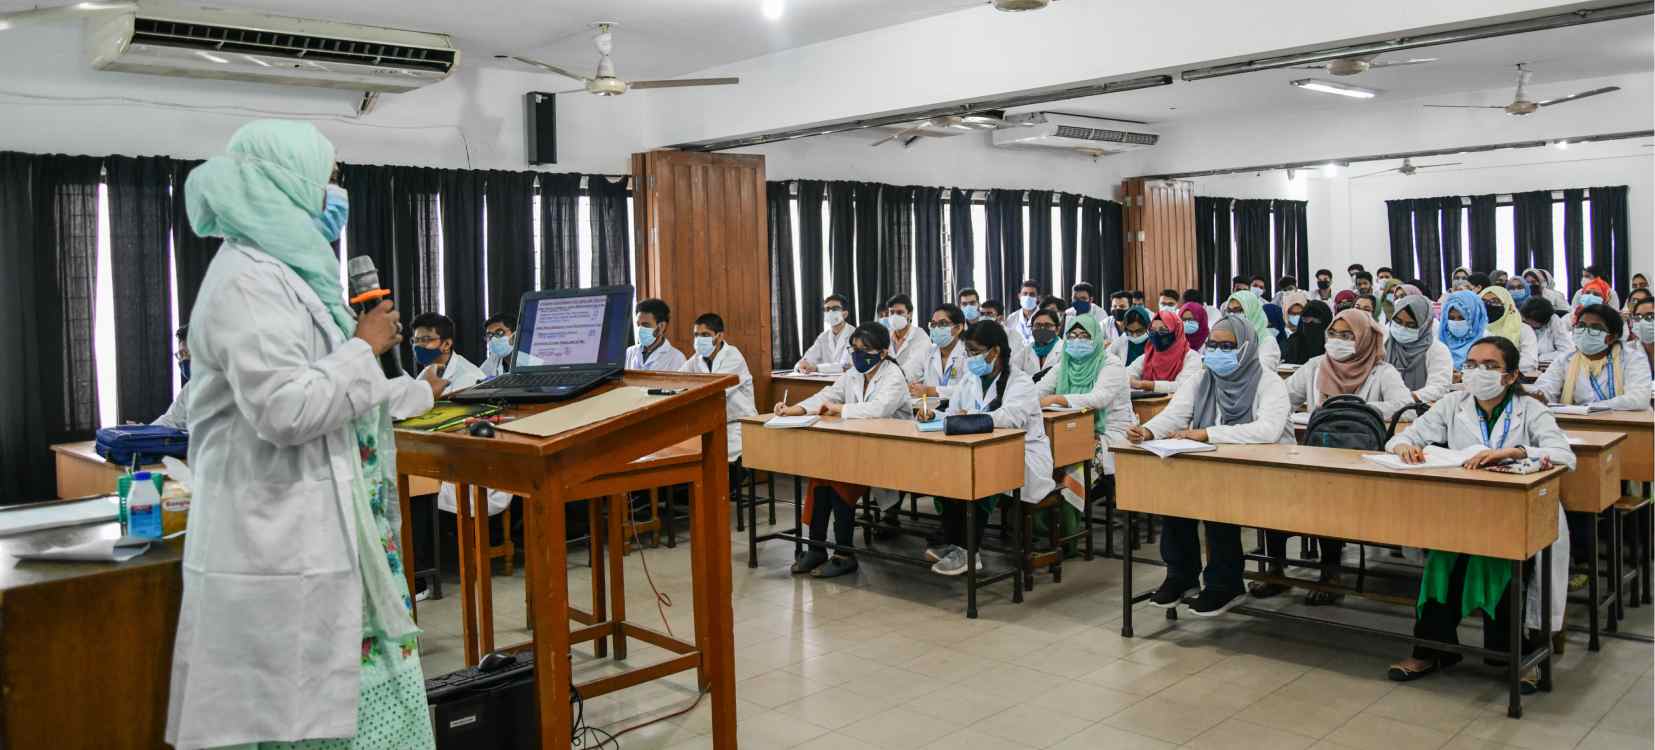 Bangladesh Medical College campus.